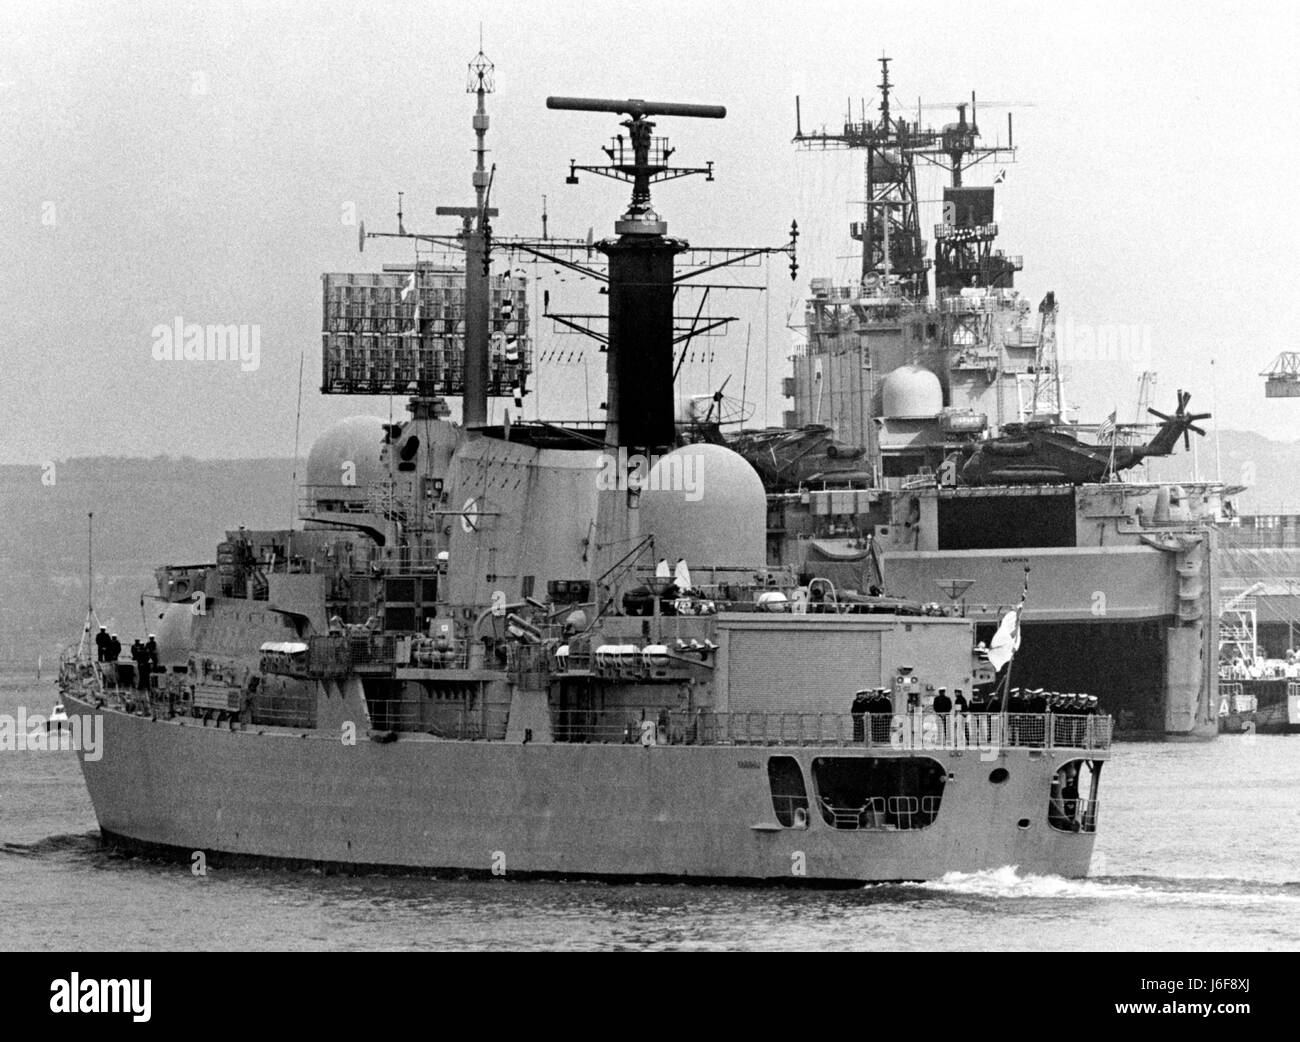 AJAXNETPHOTO. 1982. PORTSMOUTH, Inghilterra. - FALKLANDS VETERANO - HMS BIRMINGHAM ritorna dal Sud Atlantico gendarme. Foto:JONATHAN EASTLAND/AJAX. REF:821806 Foto Stock